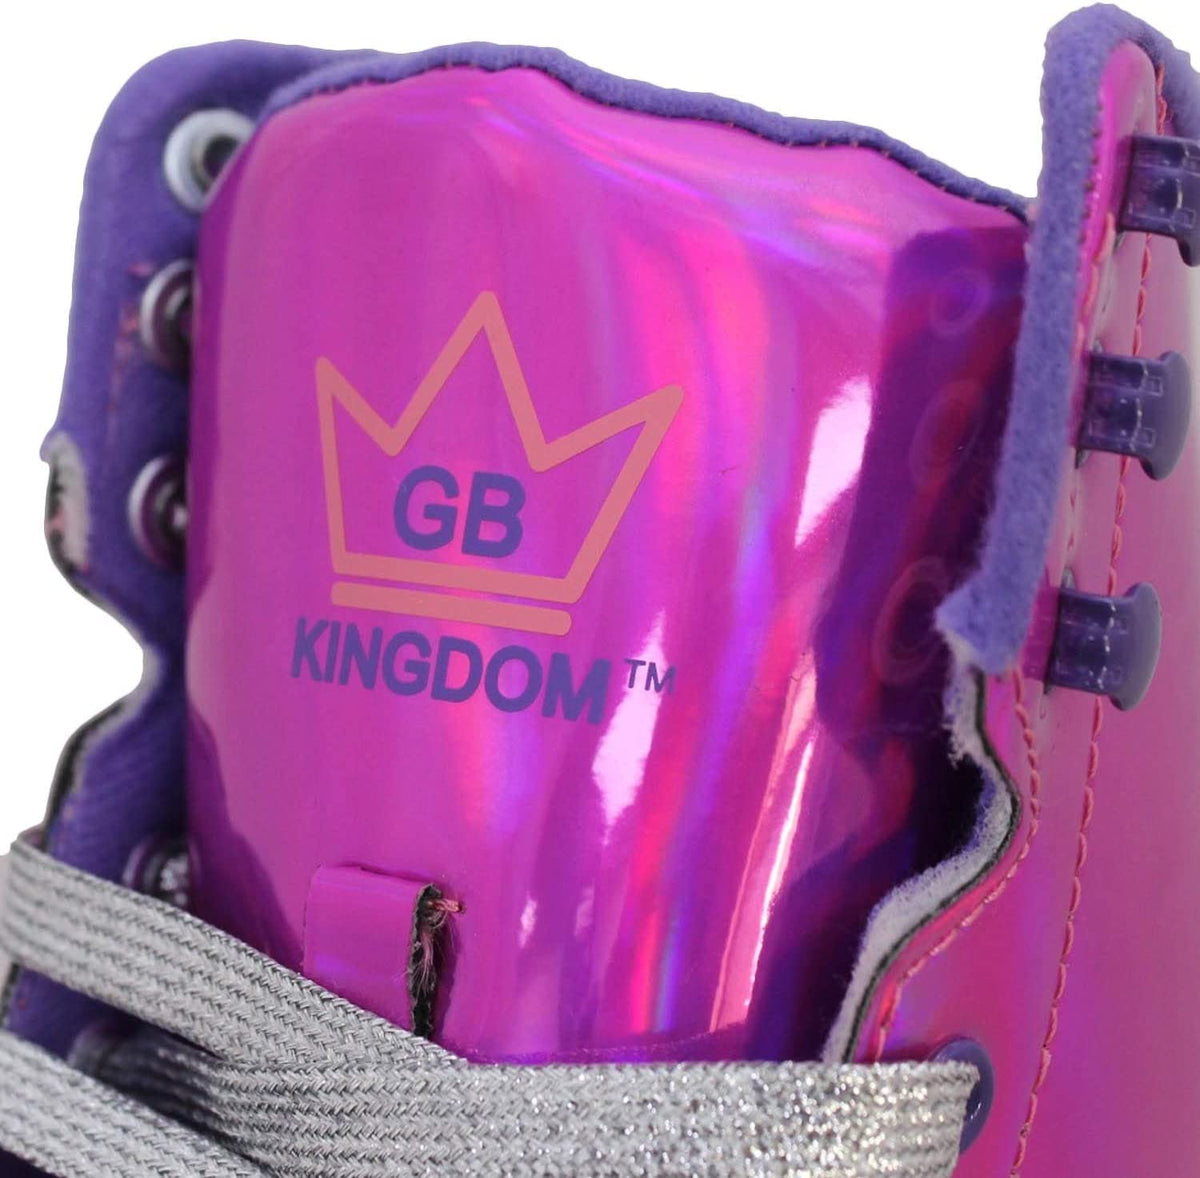 Kingdom GB Impulse Quad Roller Skates Holographic Purple